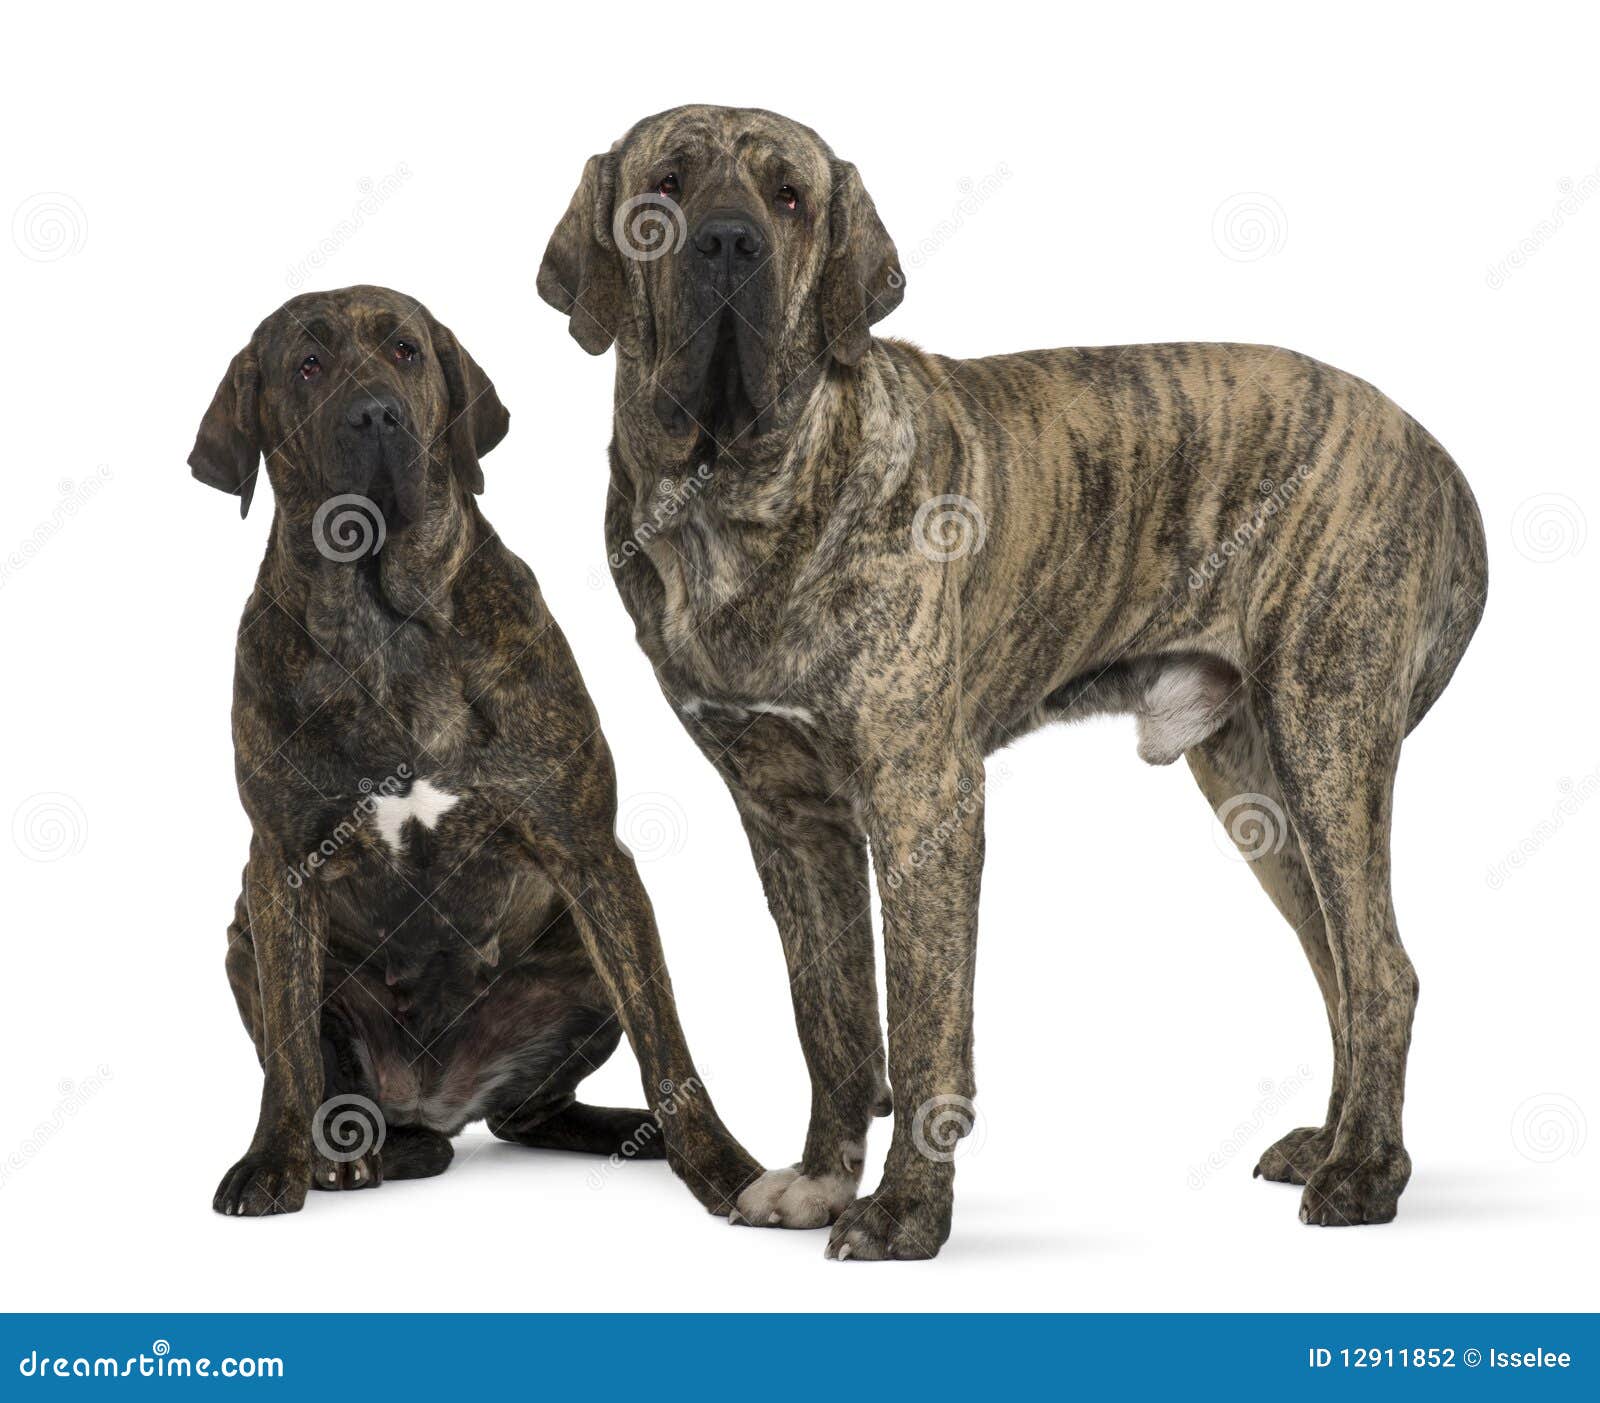 indsats edderkop Stå sammen Brazilian Mastiff or Fila Brasileiro Dog Stock Photo - Image of indoors,  length: 12911852